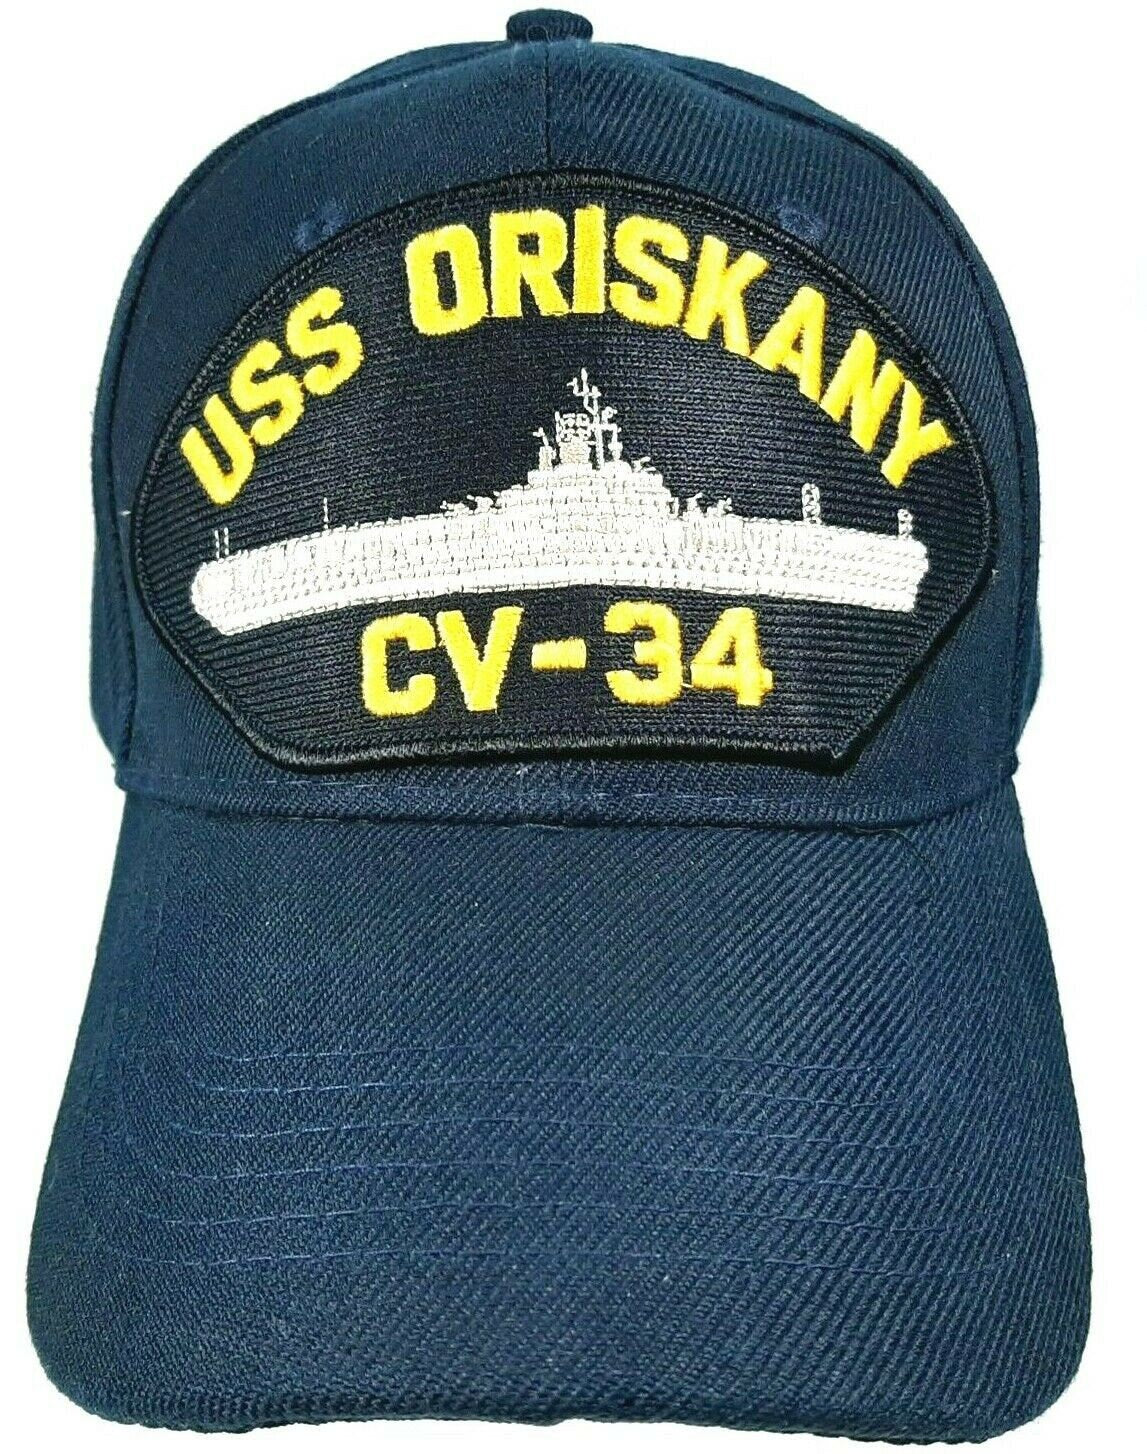 U.S. Navy USS Oriskany CV-34 Men's Patch Cap Hat Navy Blue Acrylic